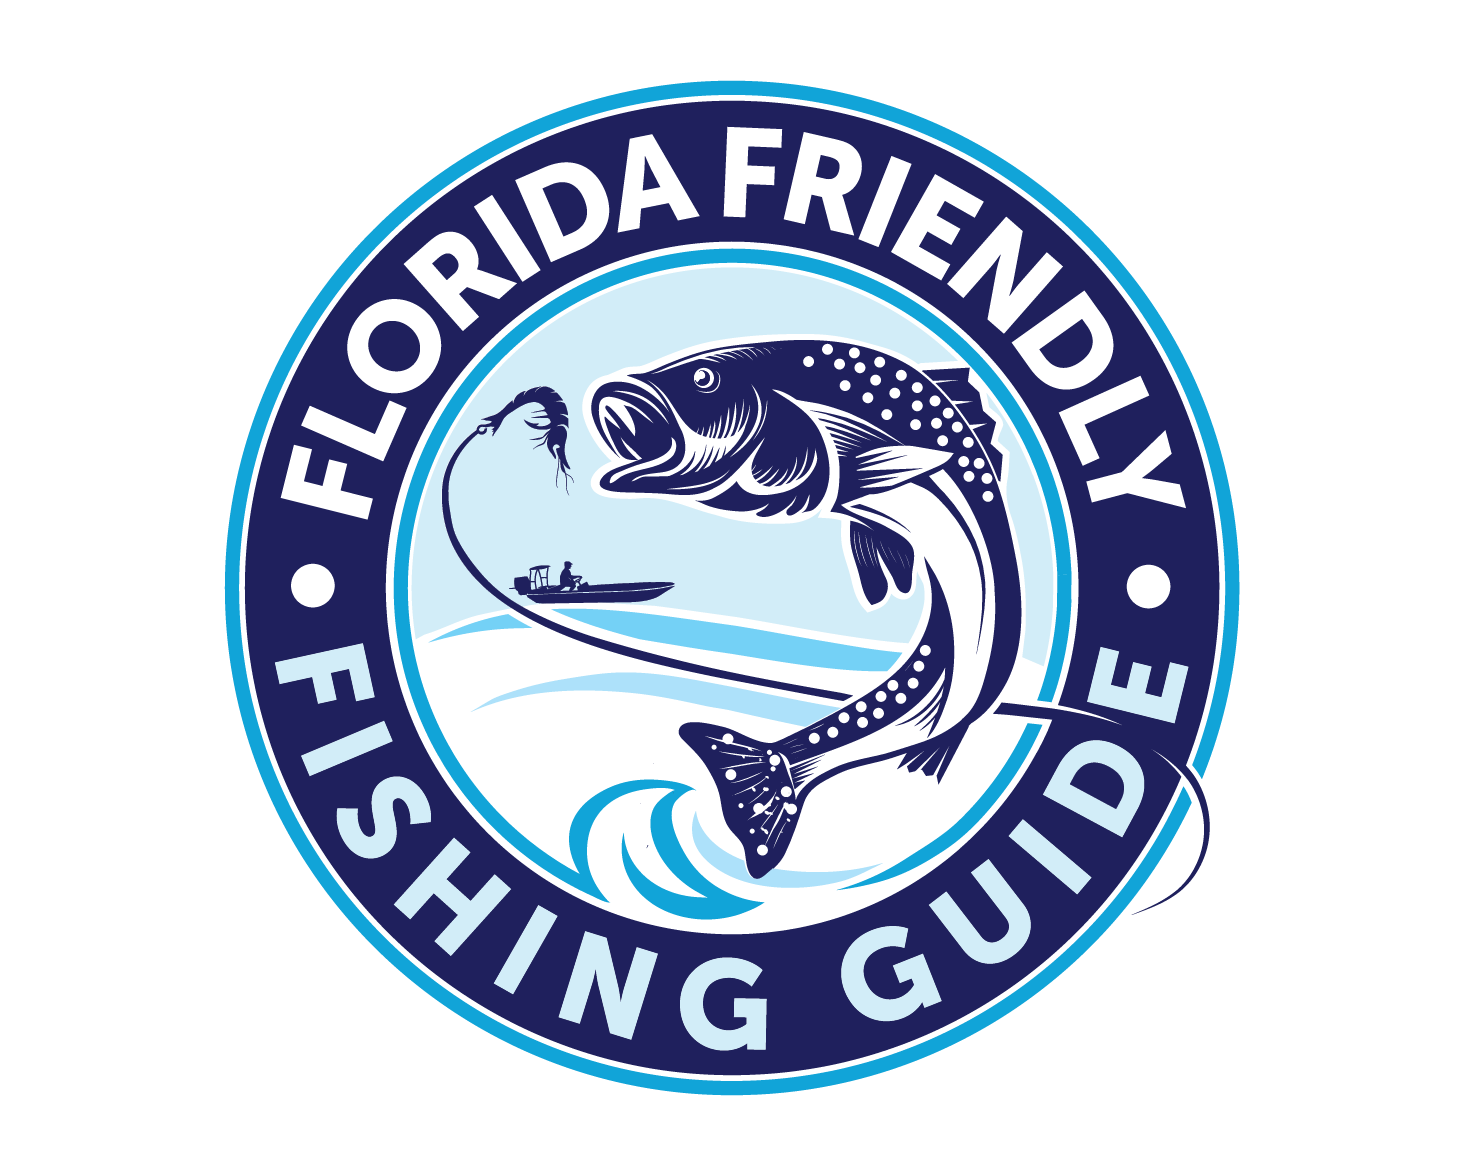 Florida Friendly Fishing Guide